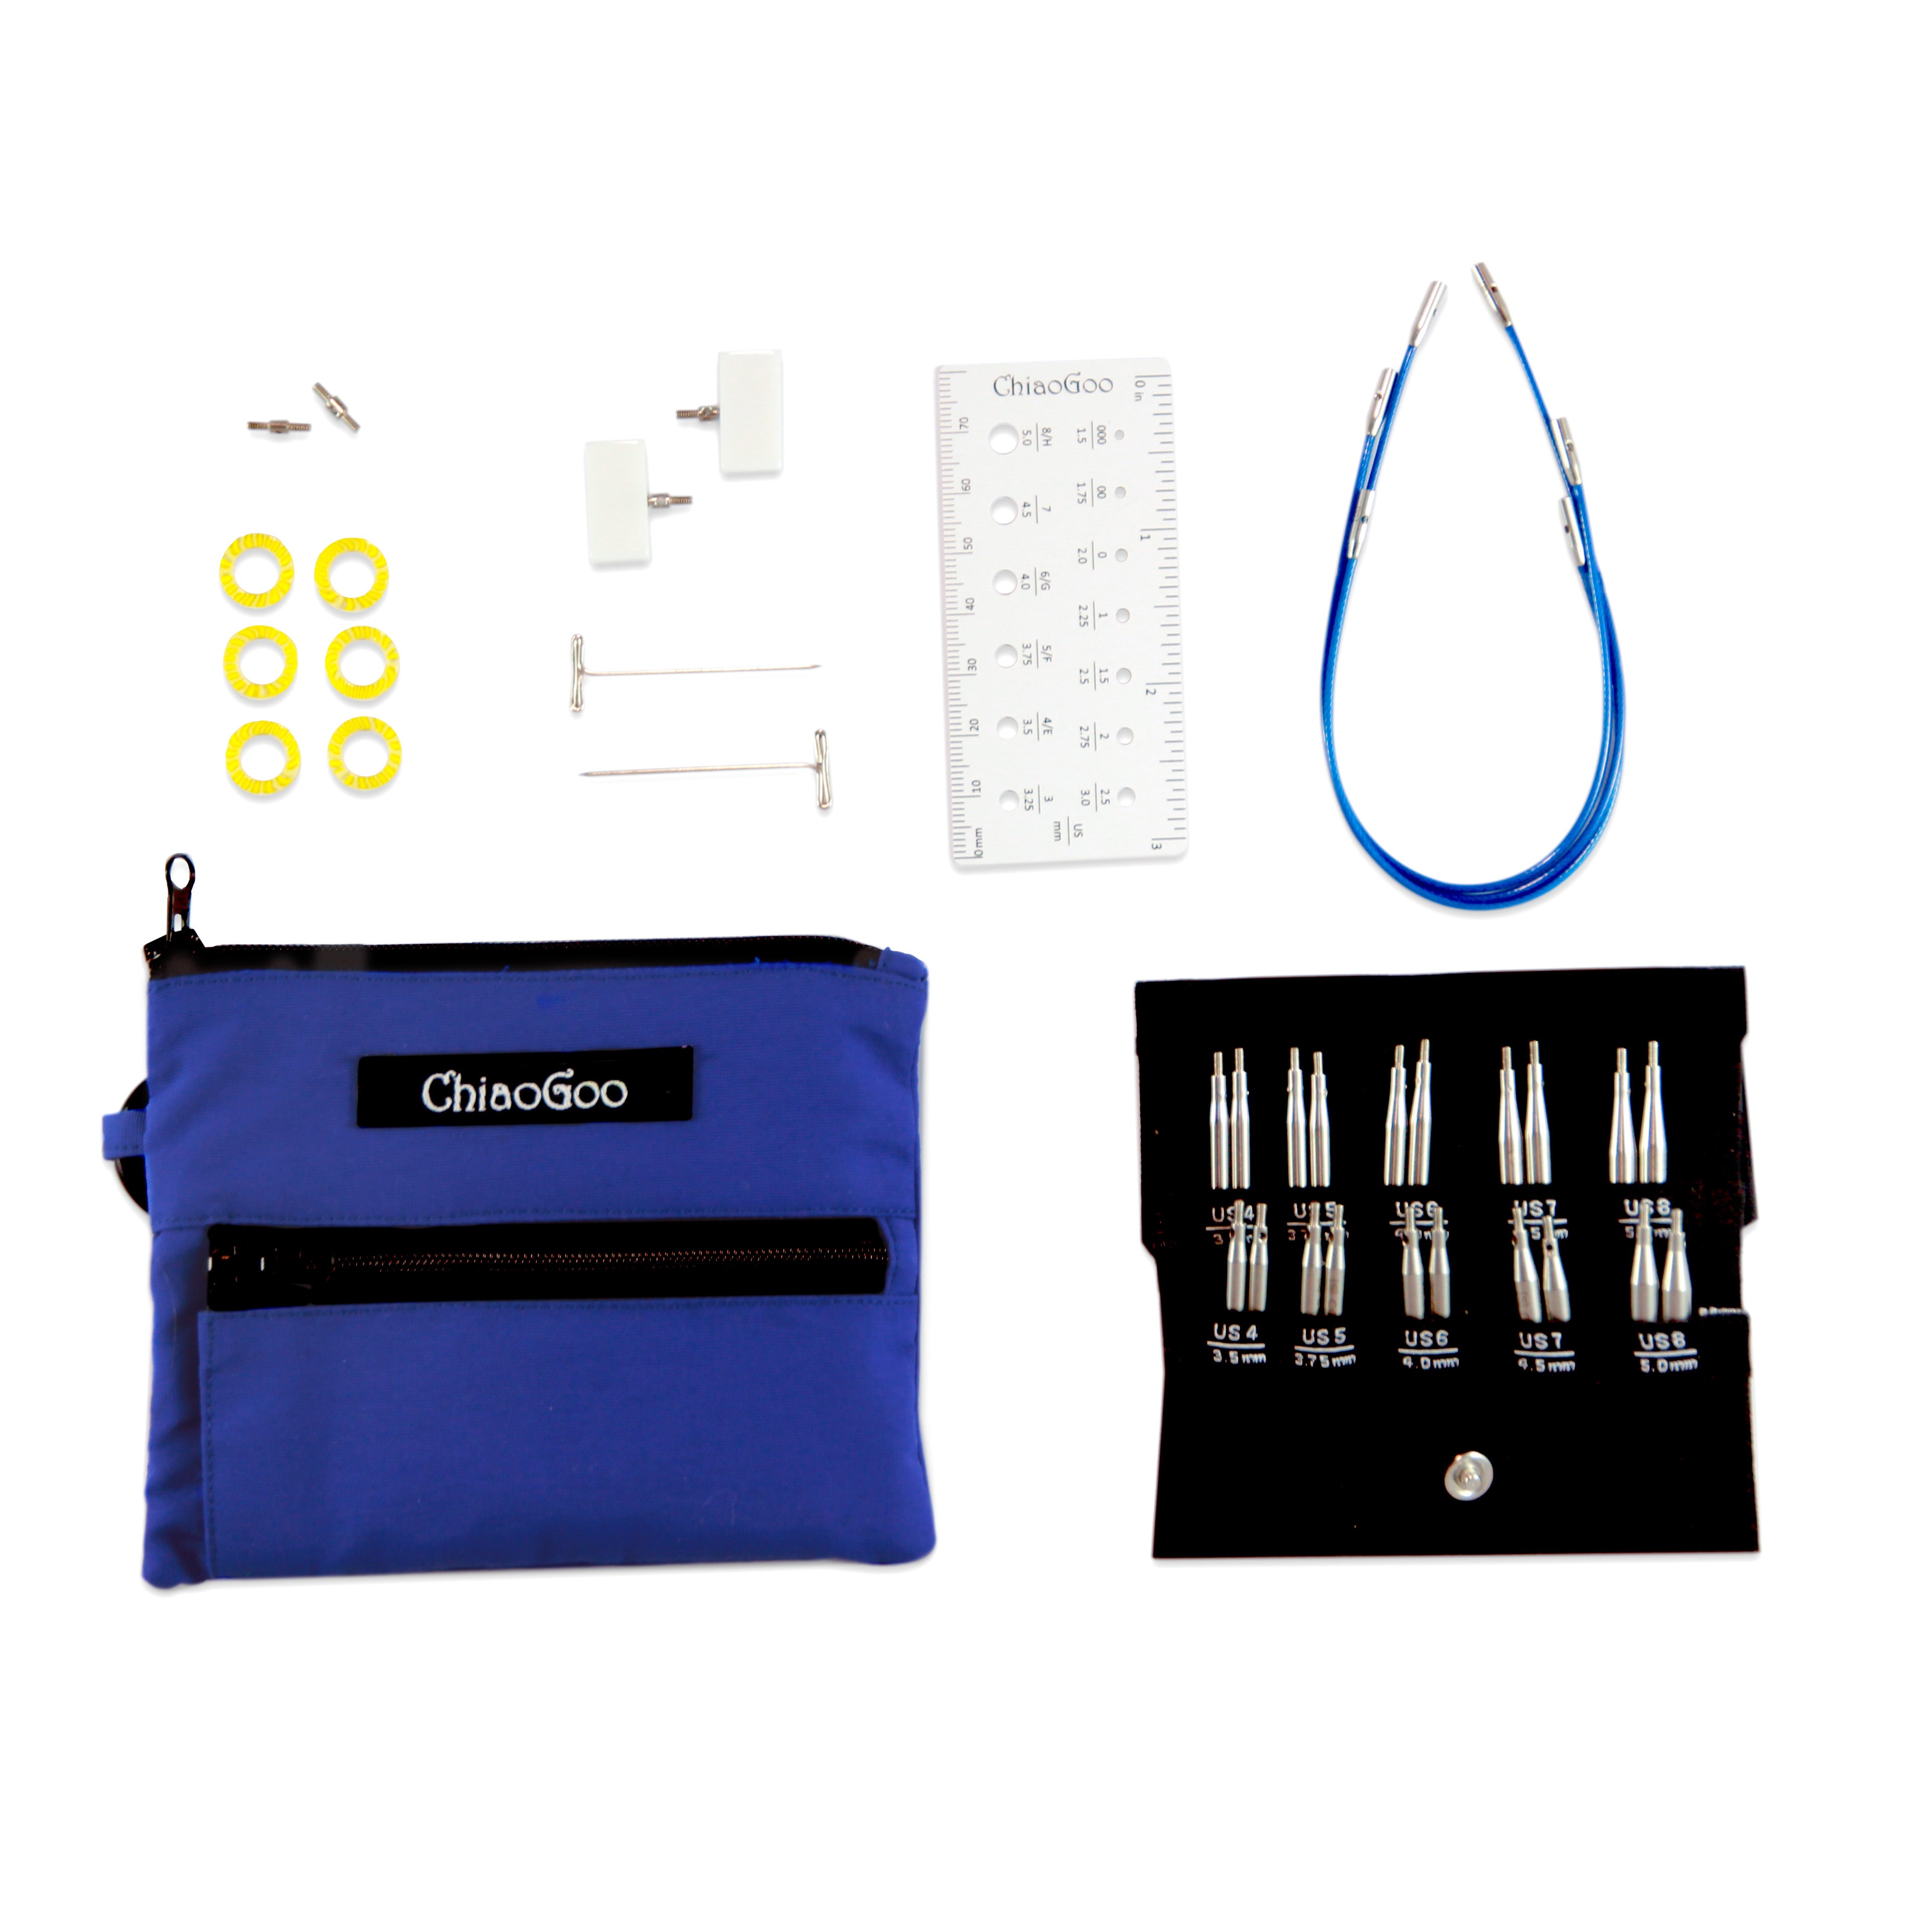 ChiaoGoo TWIST™ SHORTIES™ Set 2" & 3" (5 cm & 8 cm) Tips - Small Needle Set - Blue Case